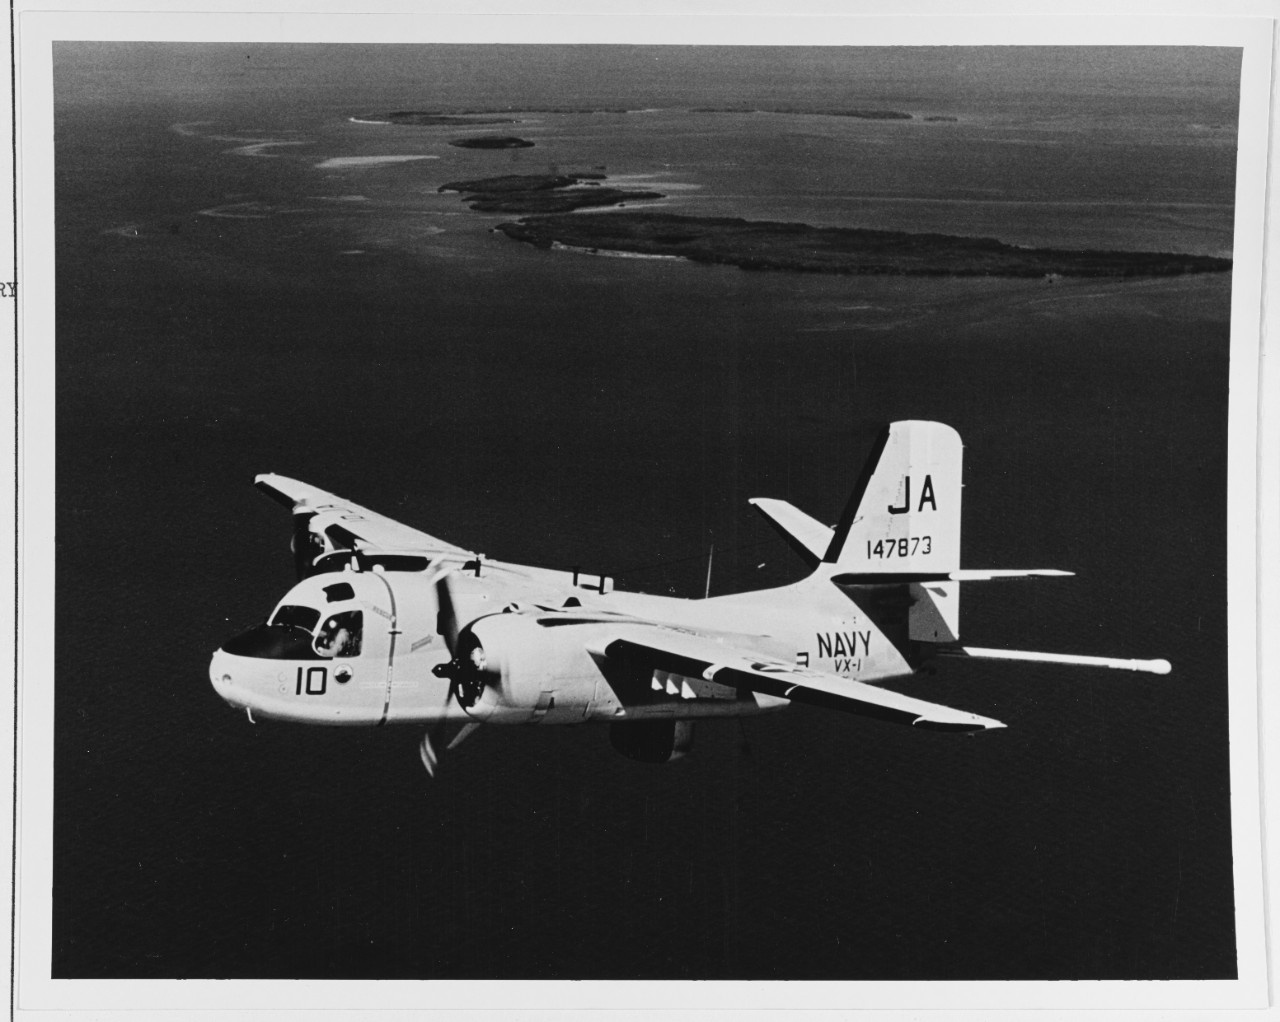 S-2E Tracker Airplane